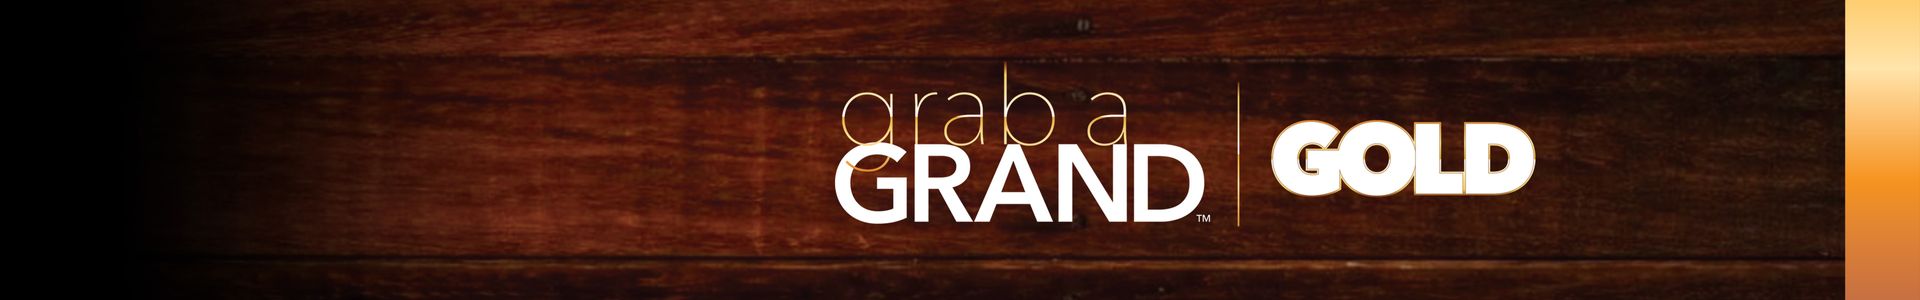 Grab-A-Grand Gold 